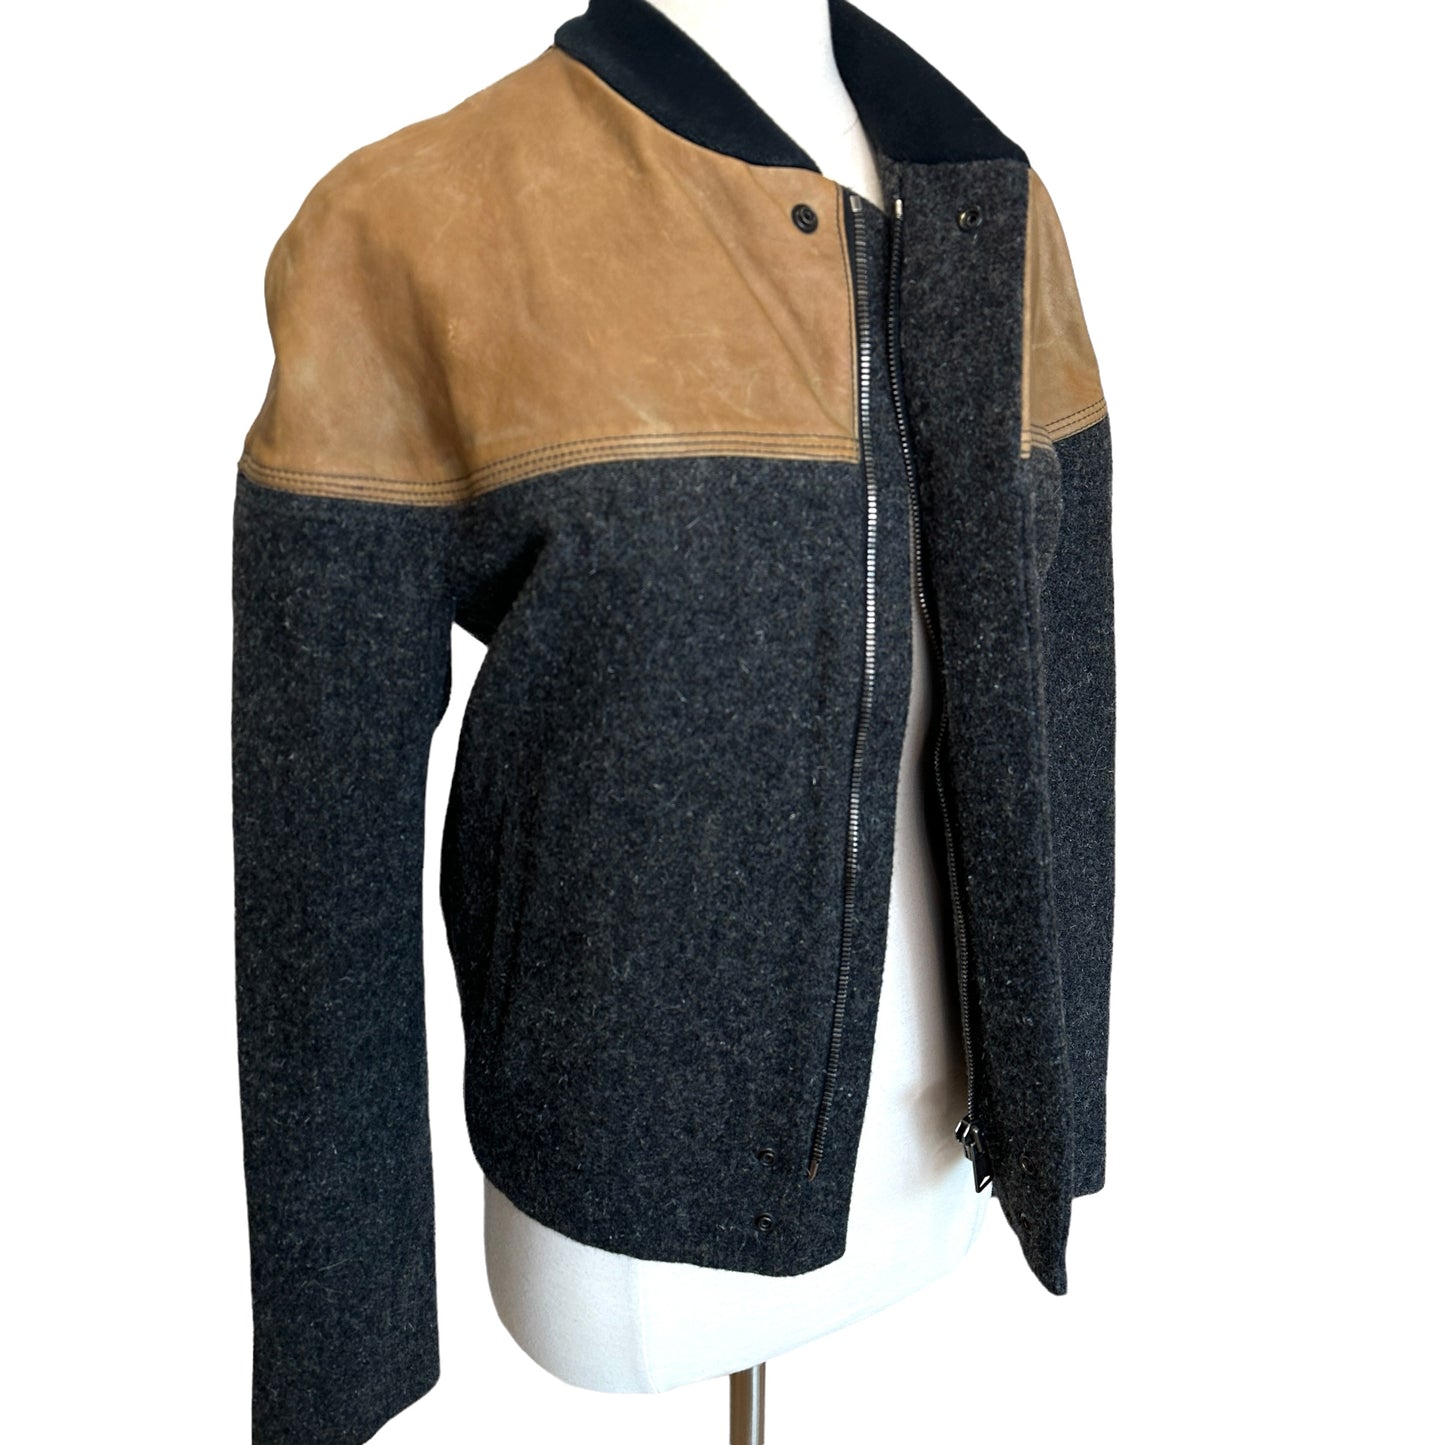 Vintage Wool & Leather Bomber Jacket - L